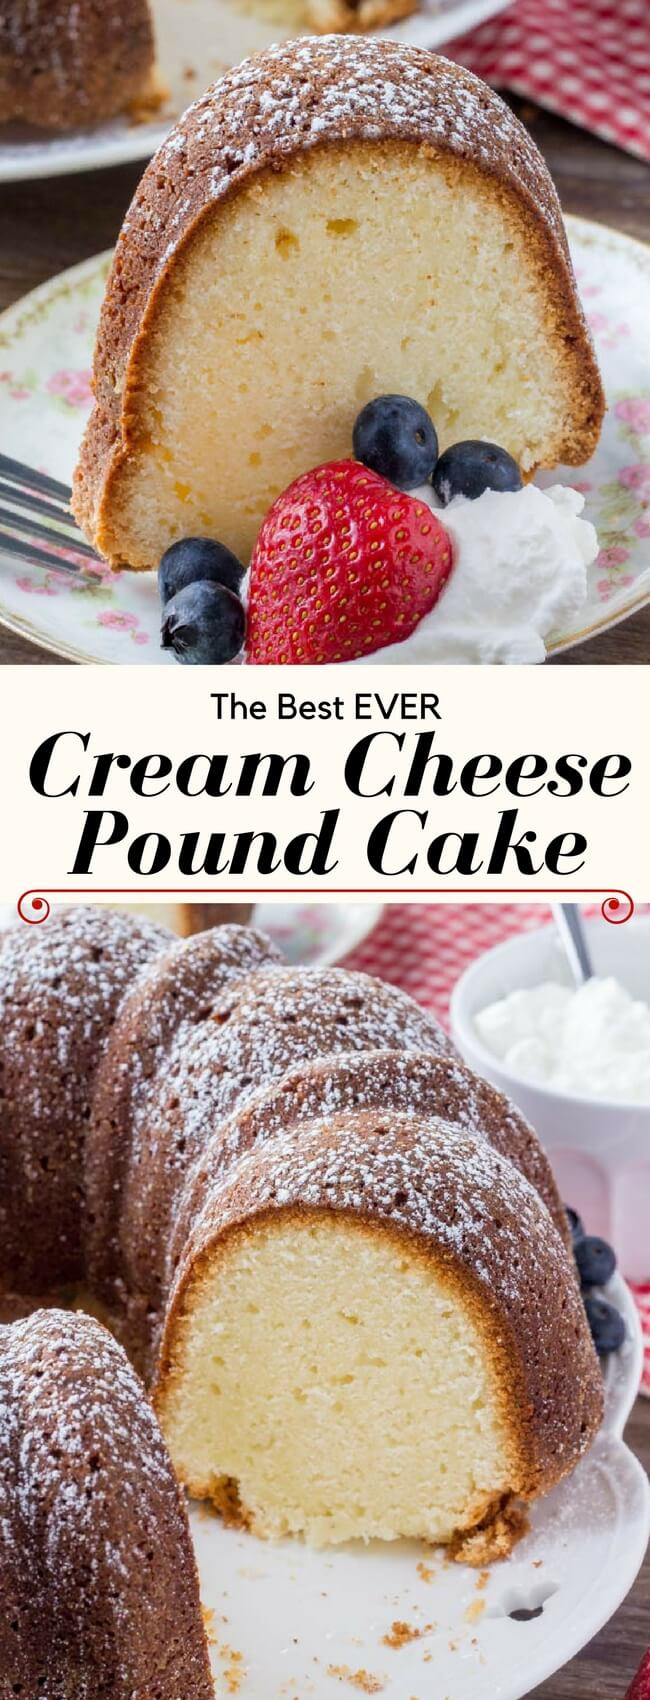 Pound Cake With Cream Cheese
 Cream Cheese Pound Cake Just so Tasty